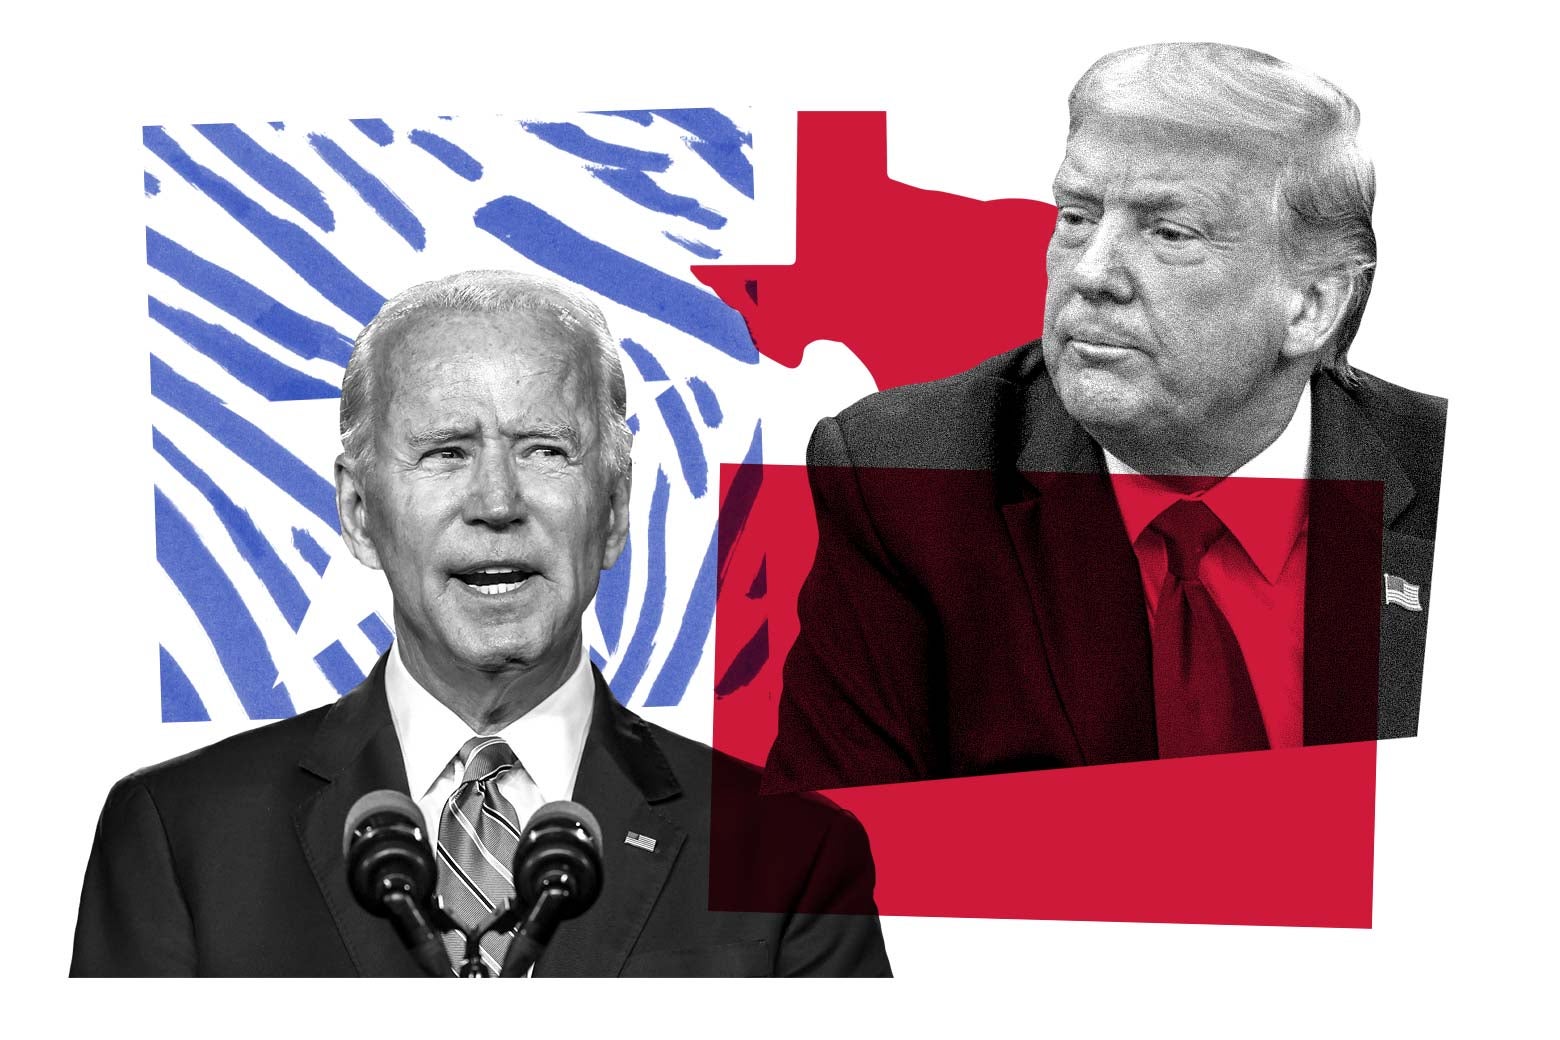 Joe Biden, Donald Trump, and the outline of Texas.